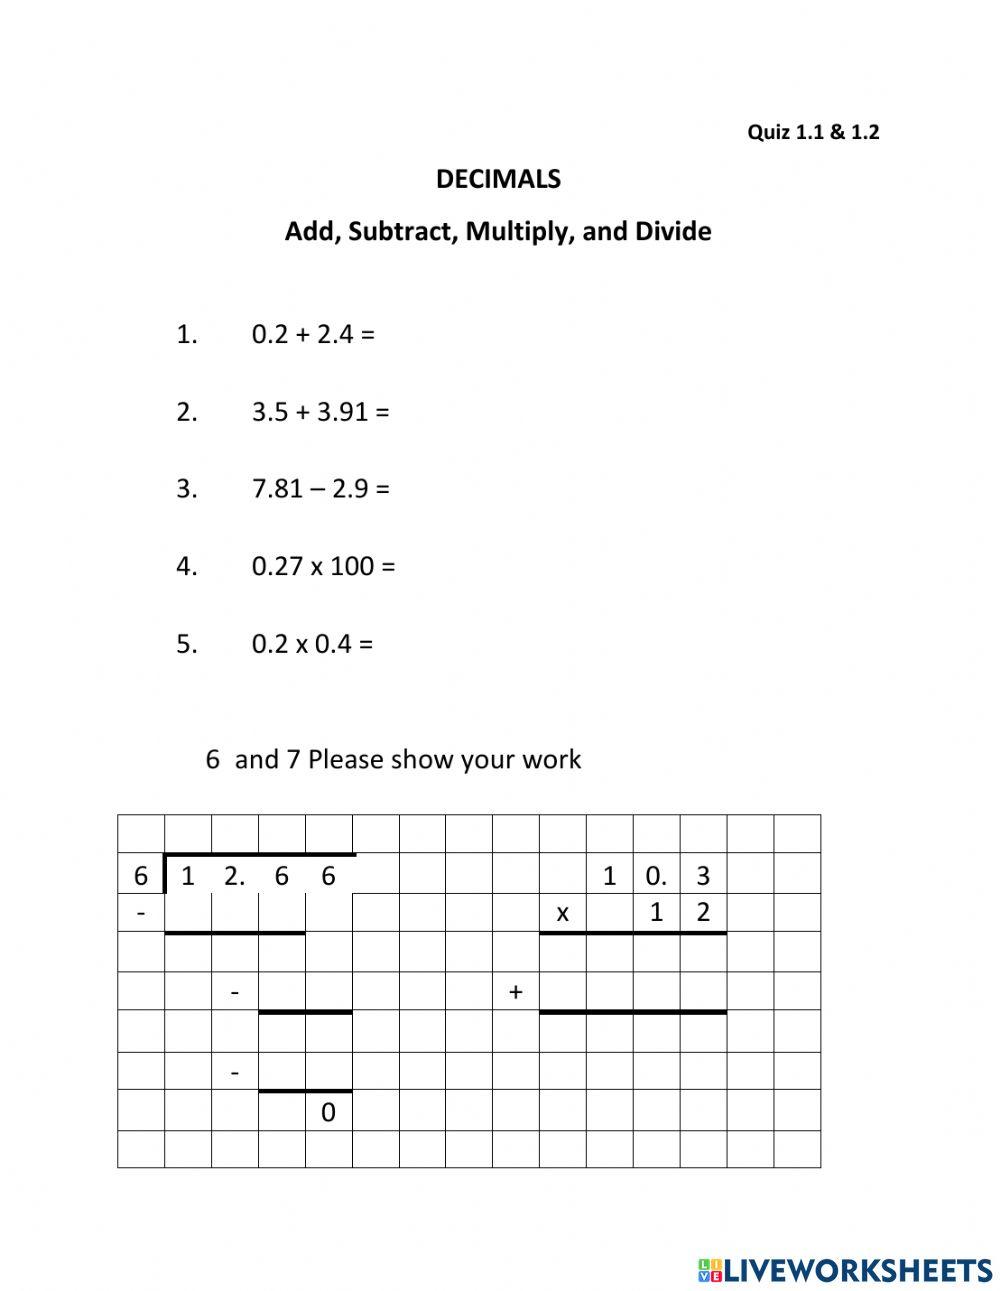 Add, Subtract, Multiply, Divide Decimals